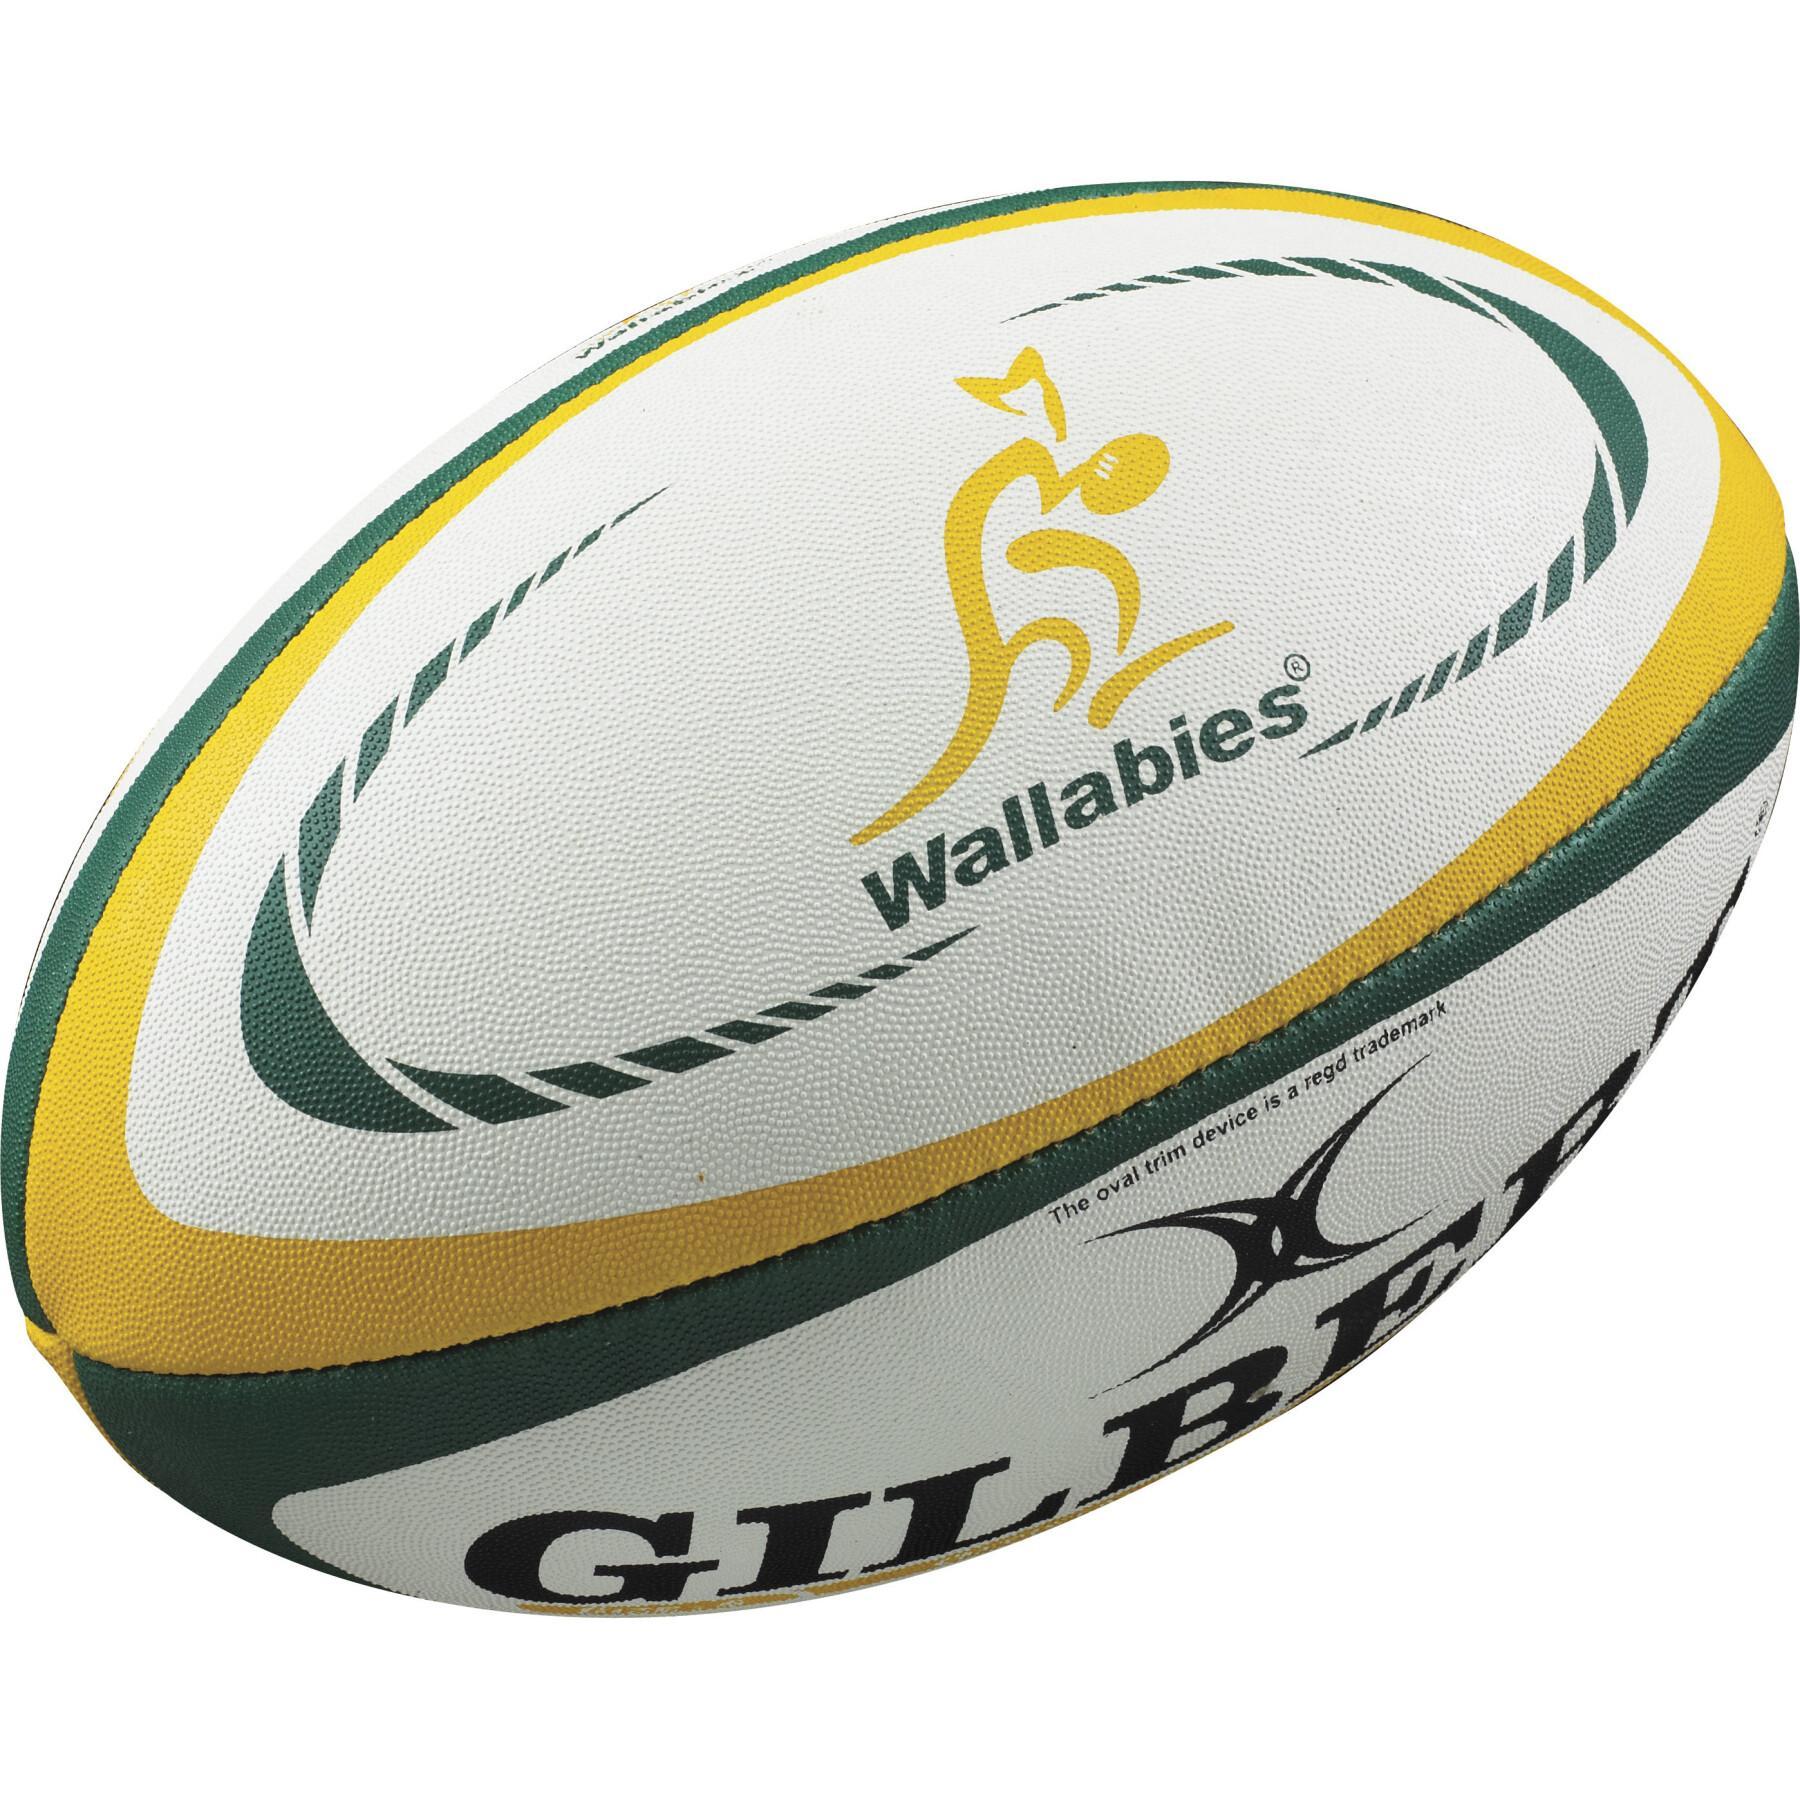 Piłka do rugby mini replika Gilbert Australie (taille 1)